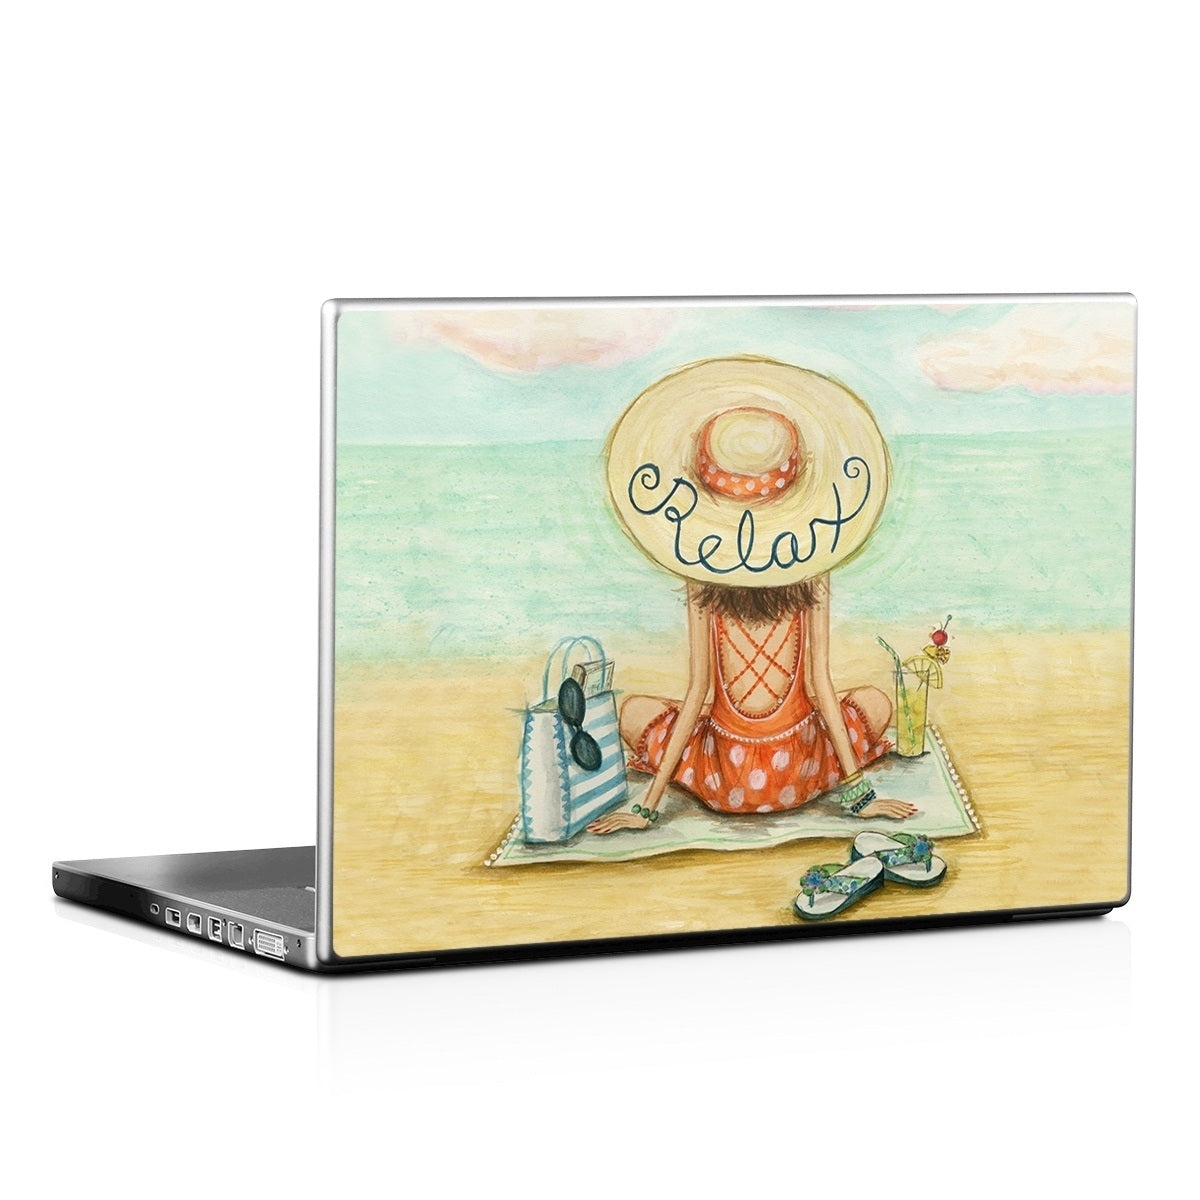 Relaxing on Beach - Laptop Lid Skin